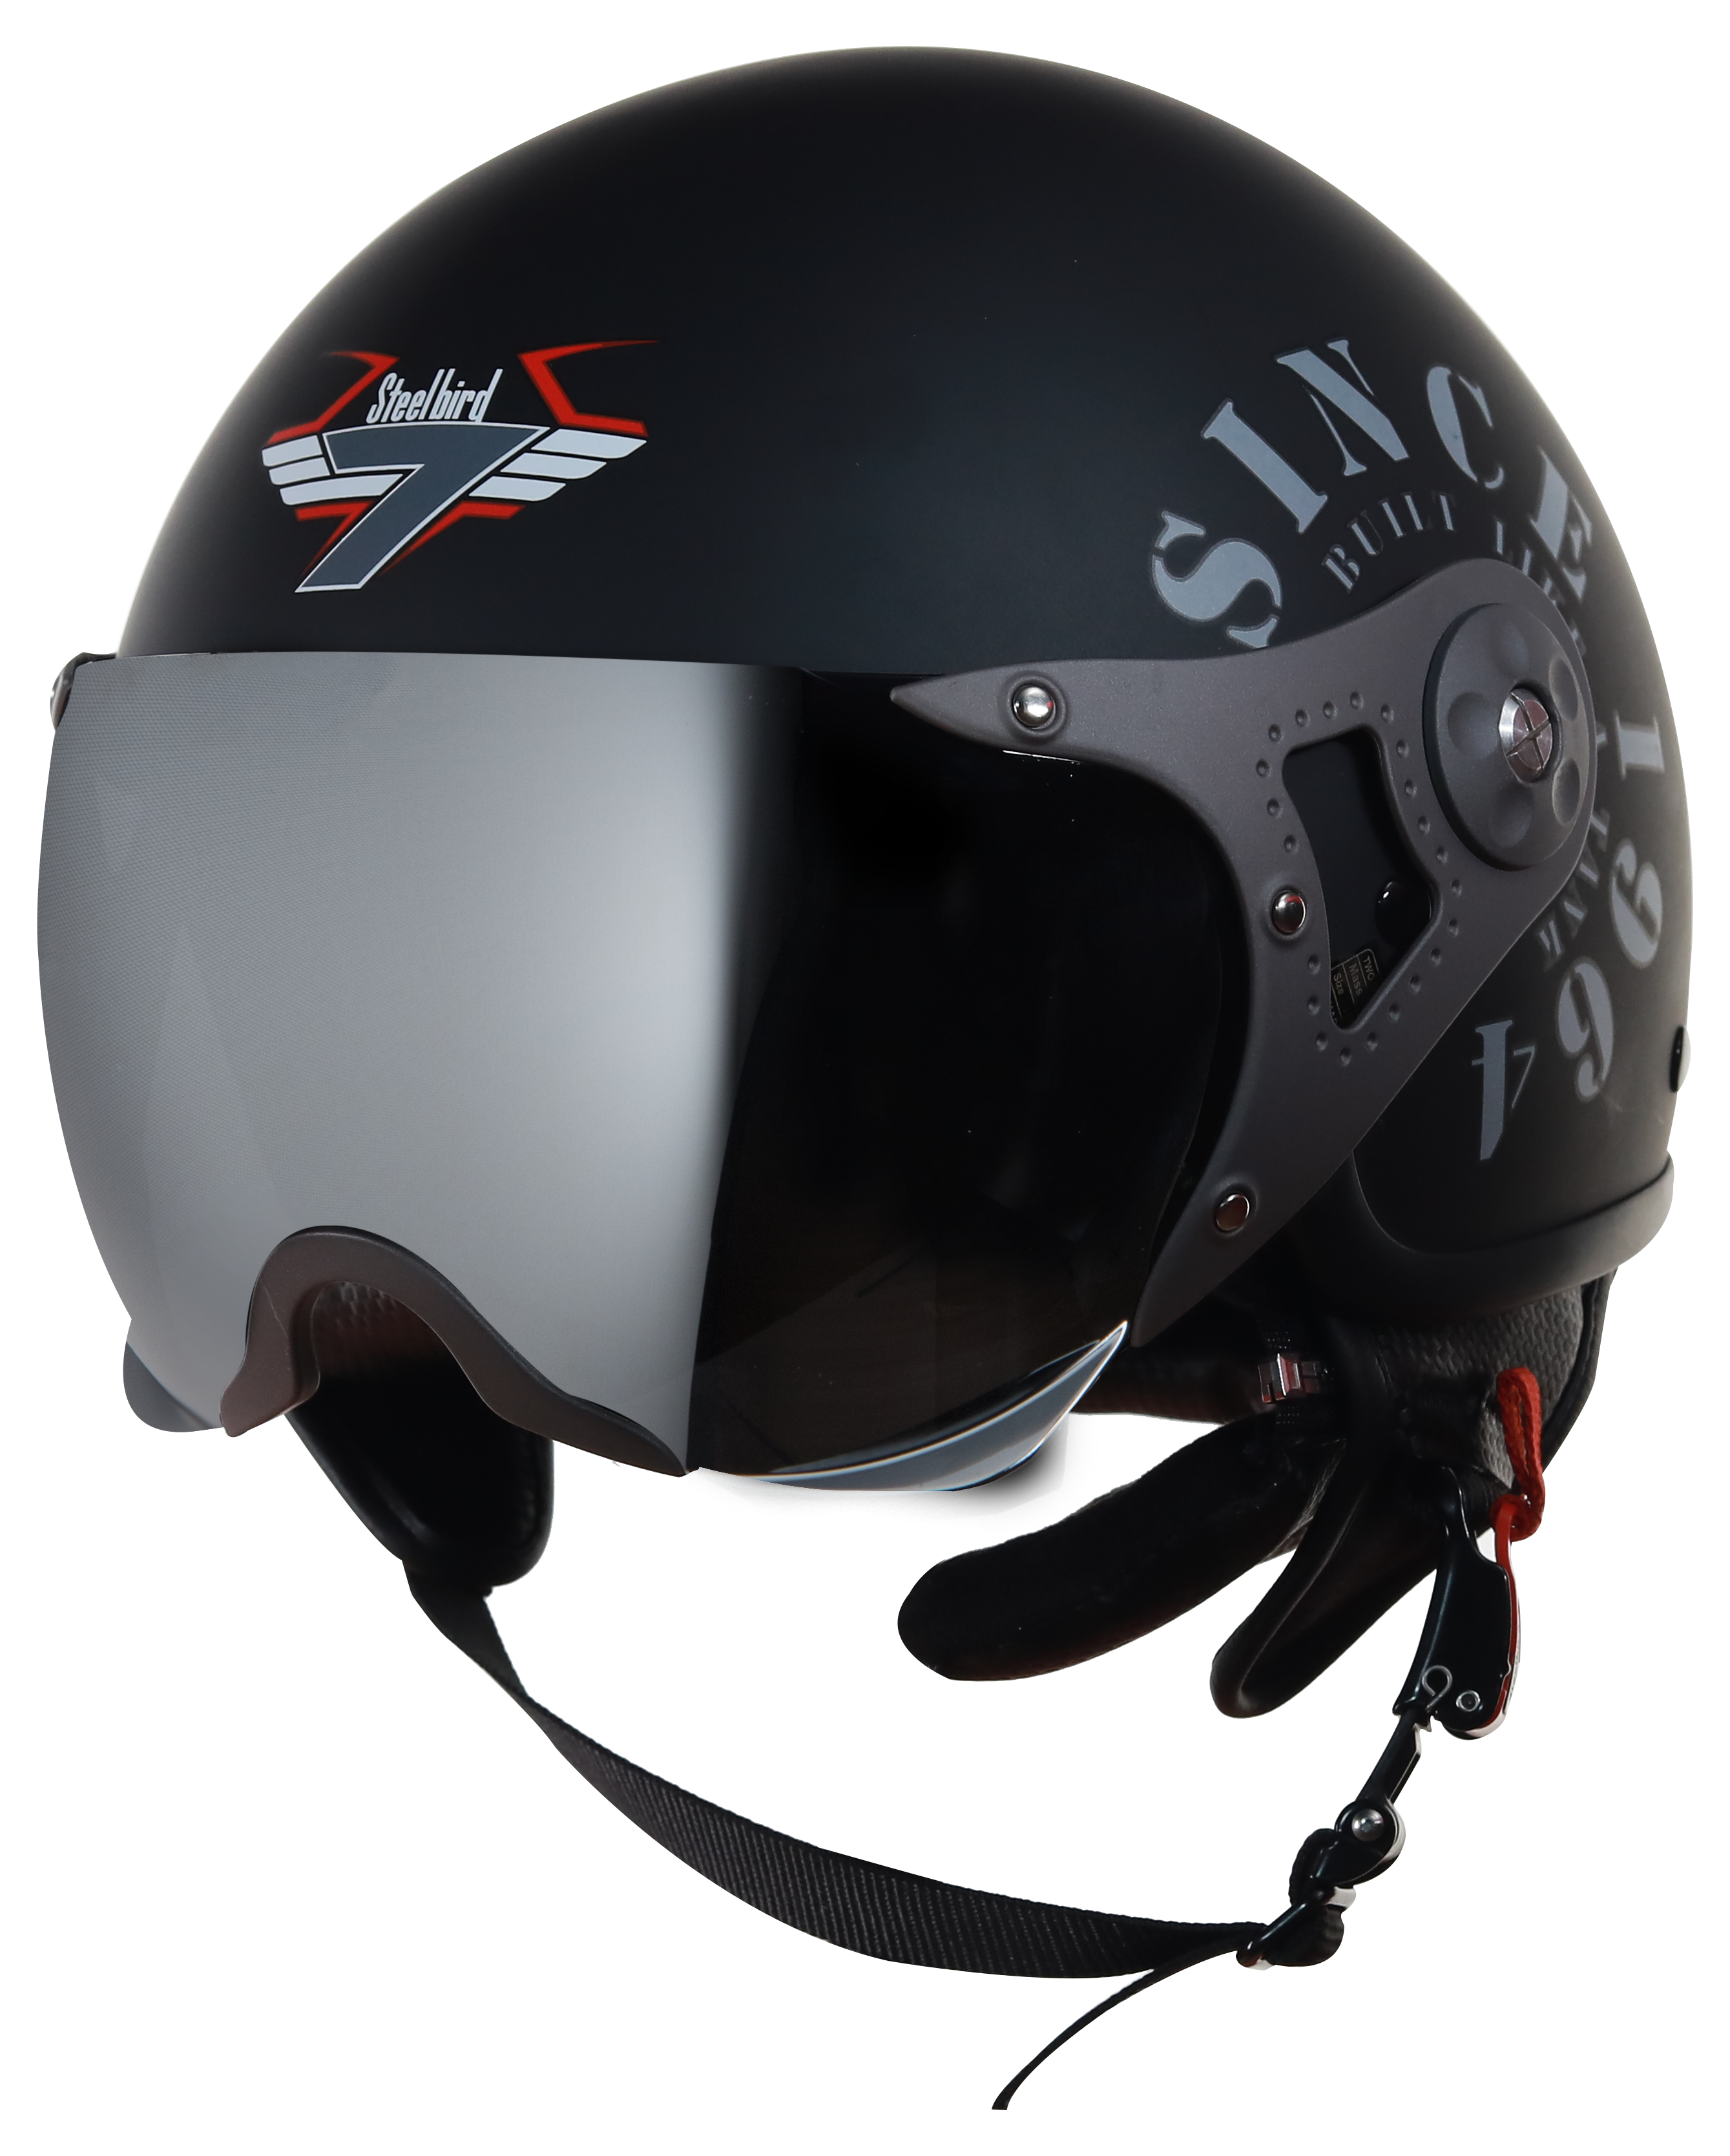 Steelbird SB-27 7Wings Tank Open Face Graphic Helmet (Matt Black Line Grey With Chrome Silver Visor)